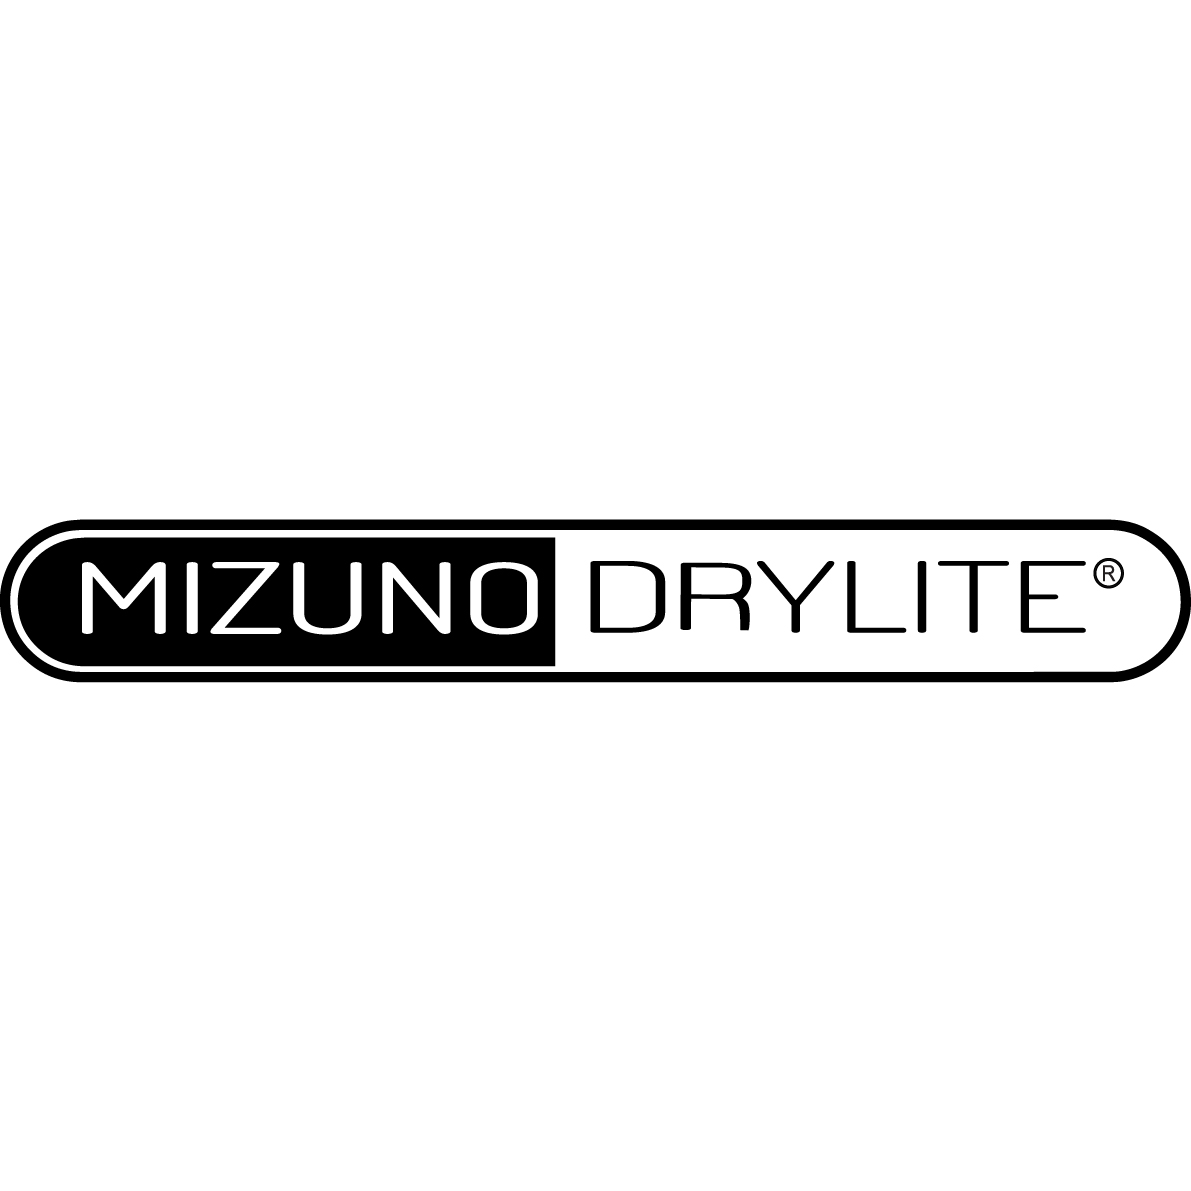 MizunoDryLite